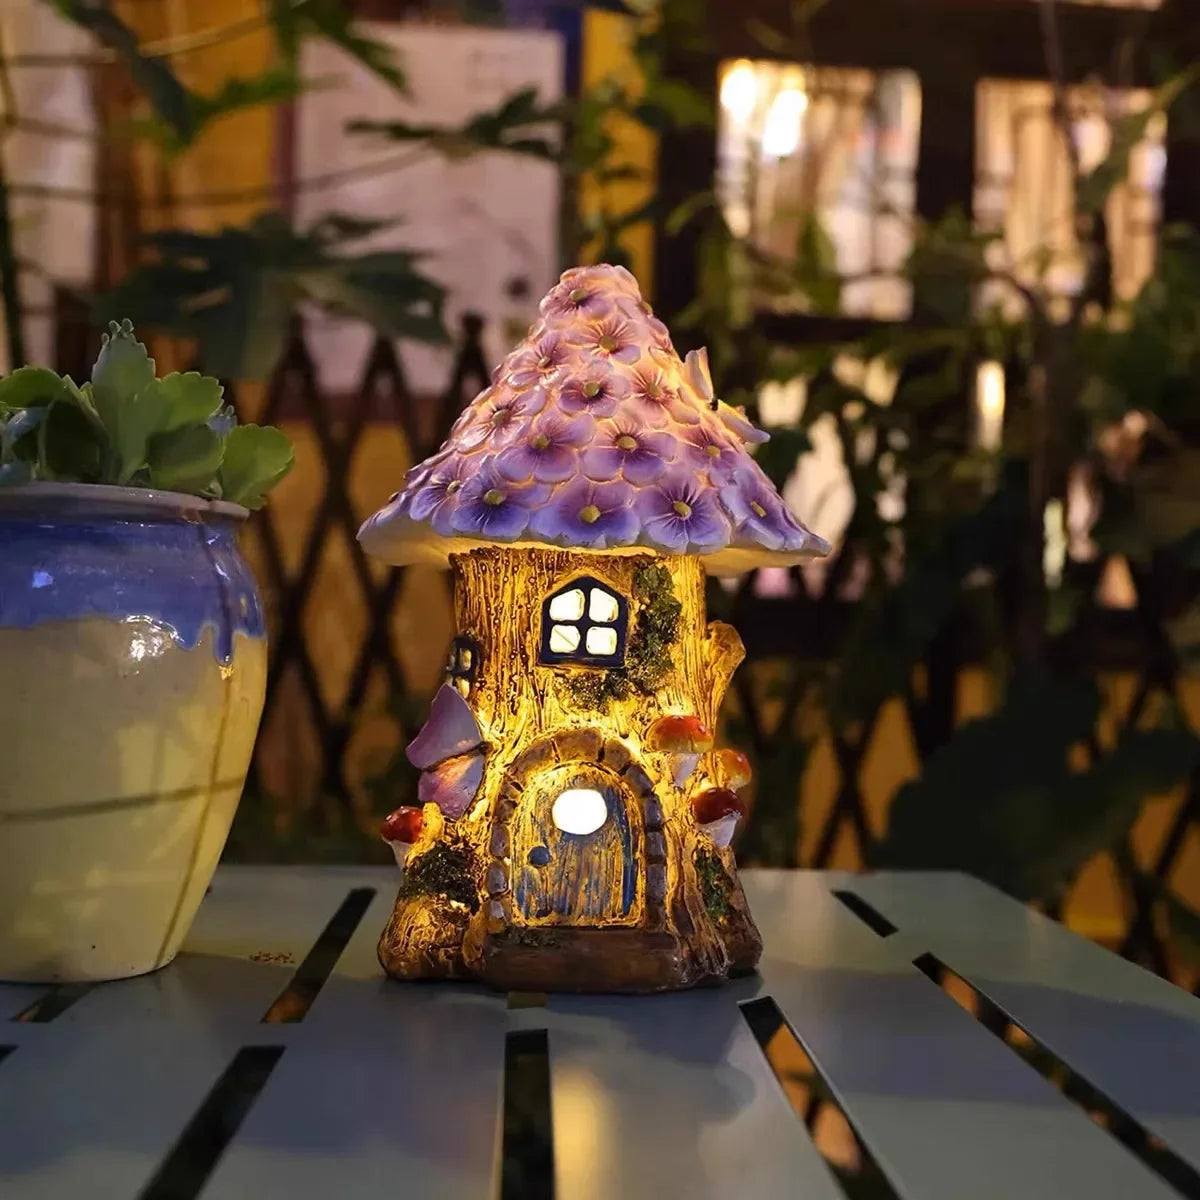 Craft Miniature Flower House Solar LED Lights Garden Fairy Outdoor Walkway Sunflower Resin Cottage Christmas Lights Decoration